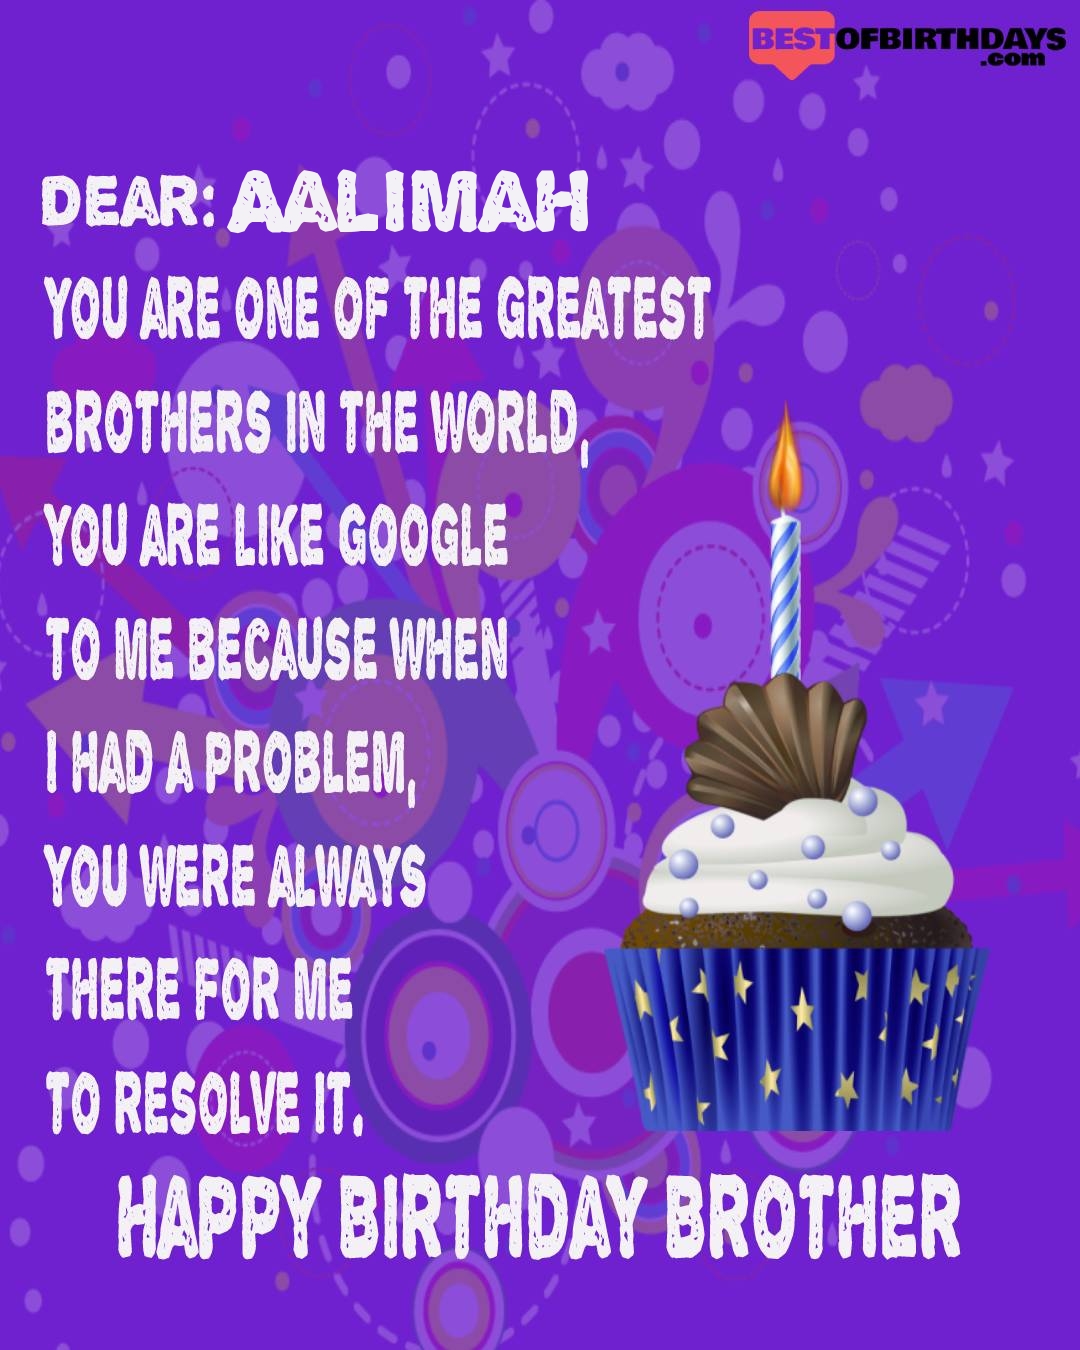 Happy birthday aalimah bhai brother bro